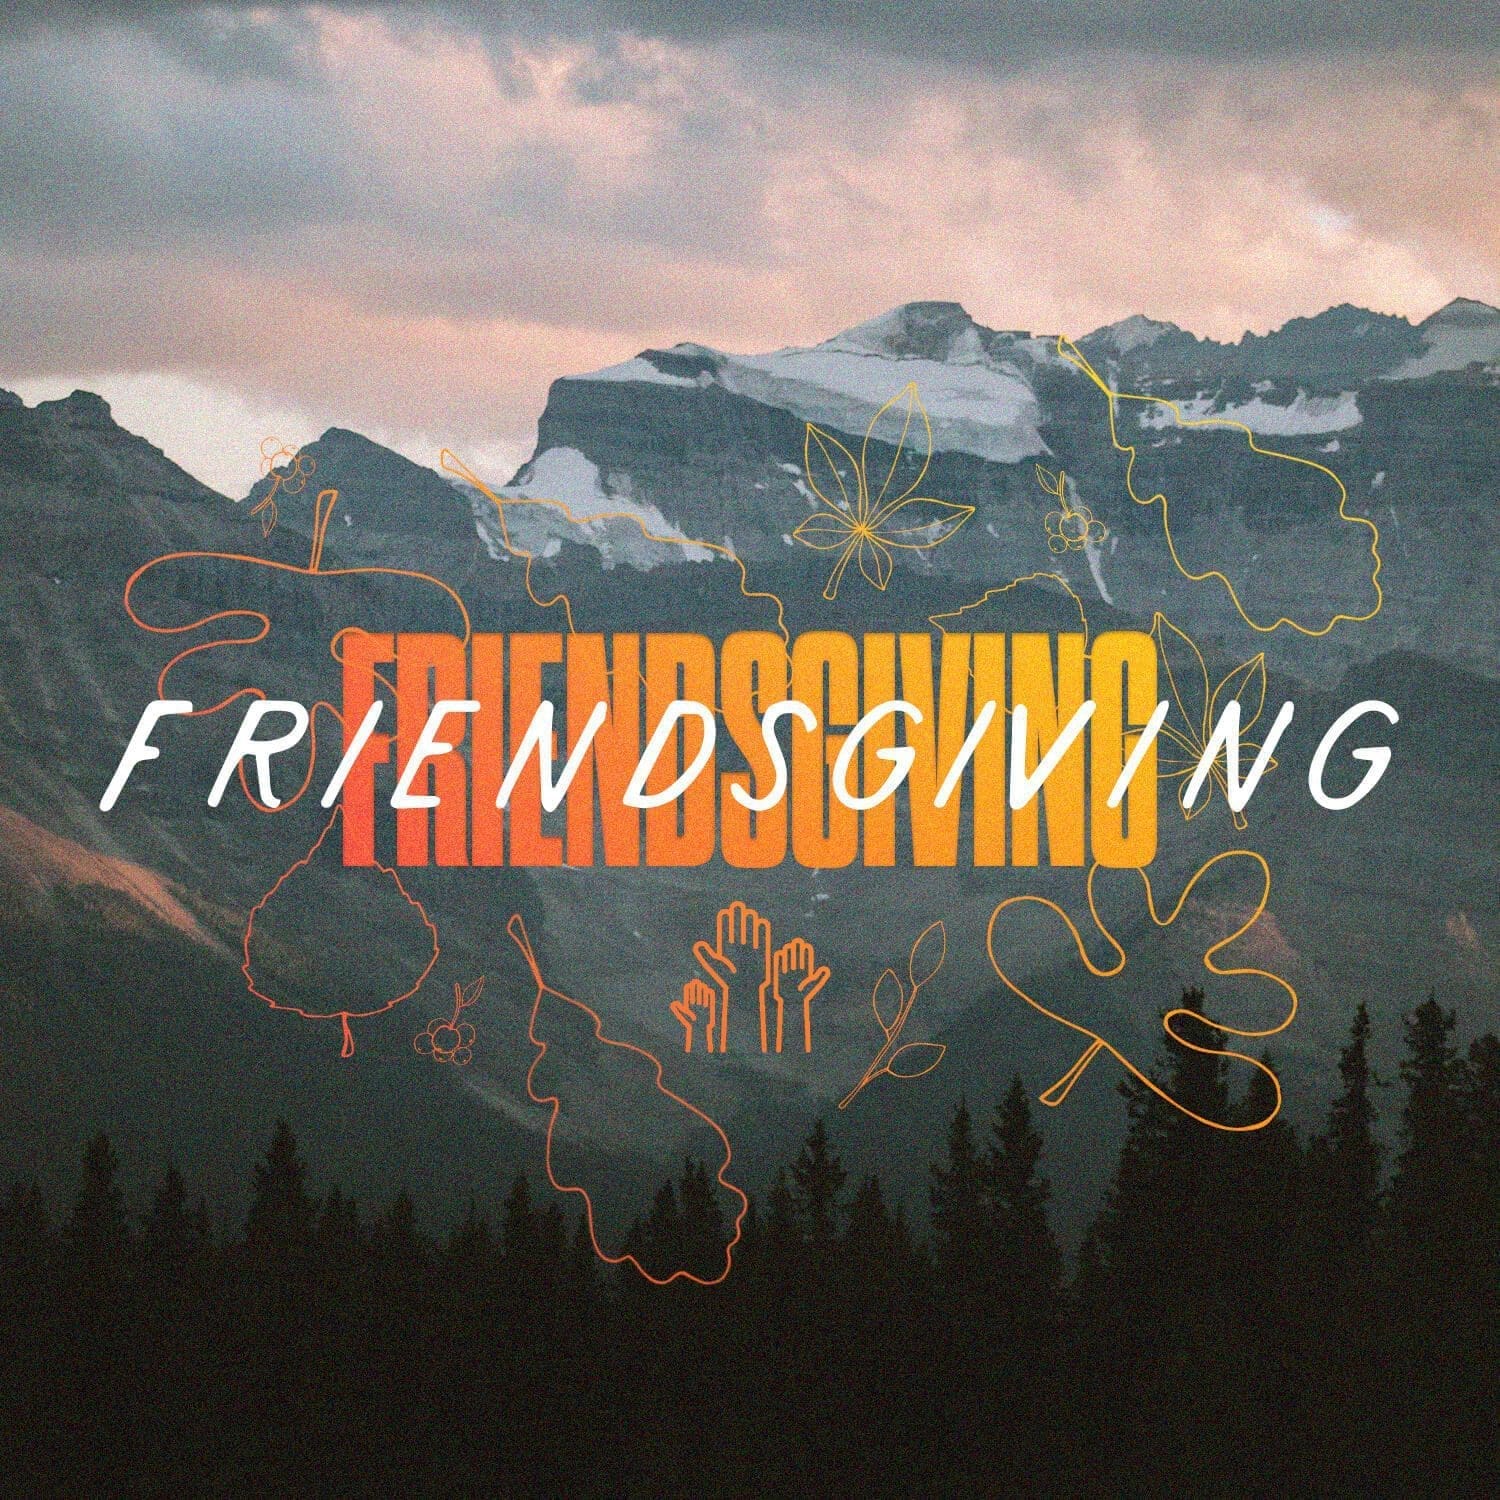 Friendsgiving